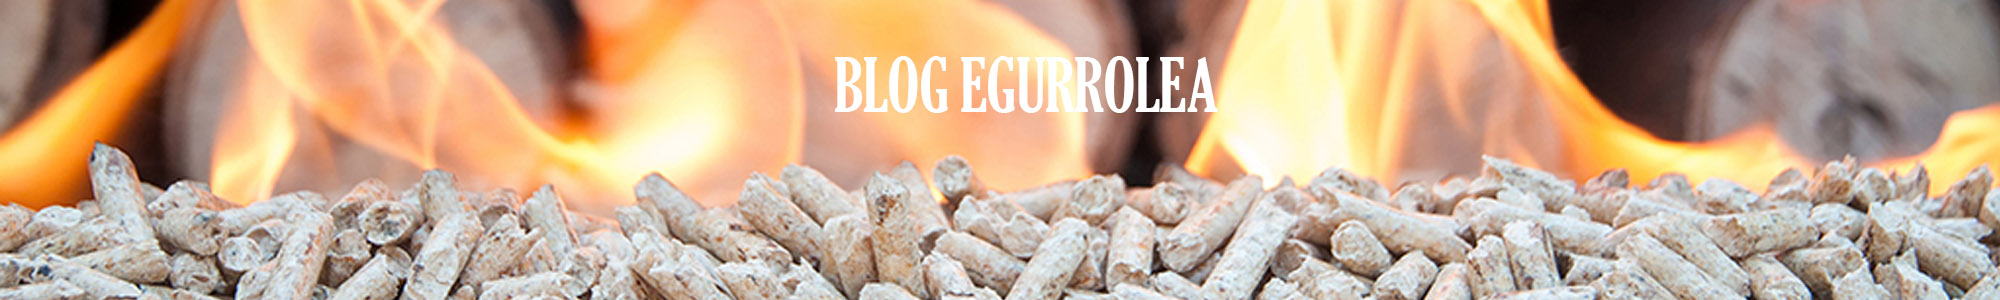 Blog Egurrolea